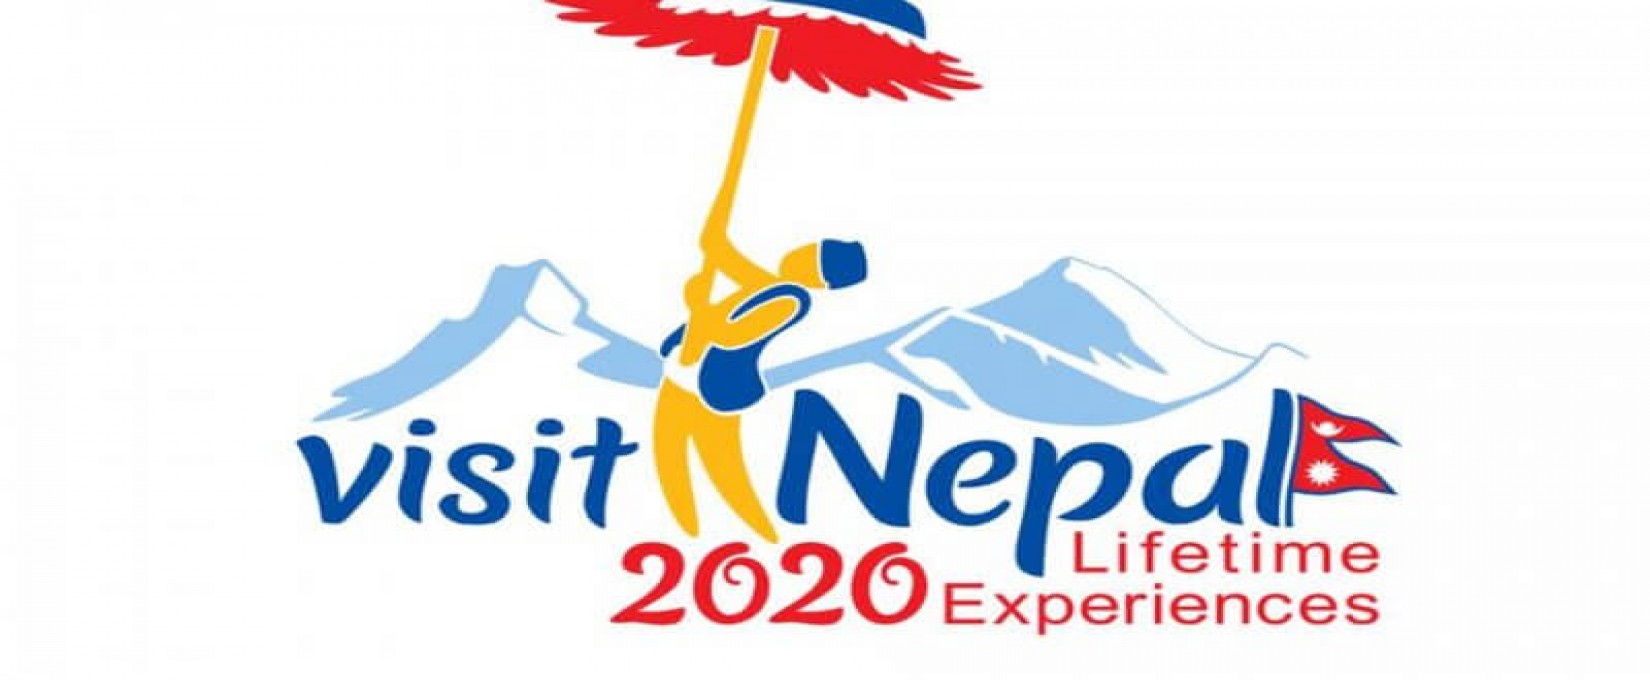 VISIT NEPAL 2020